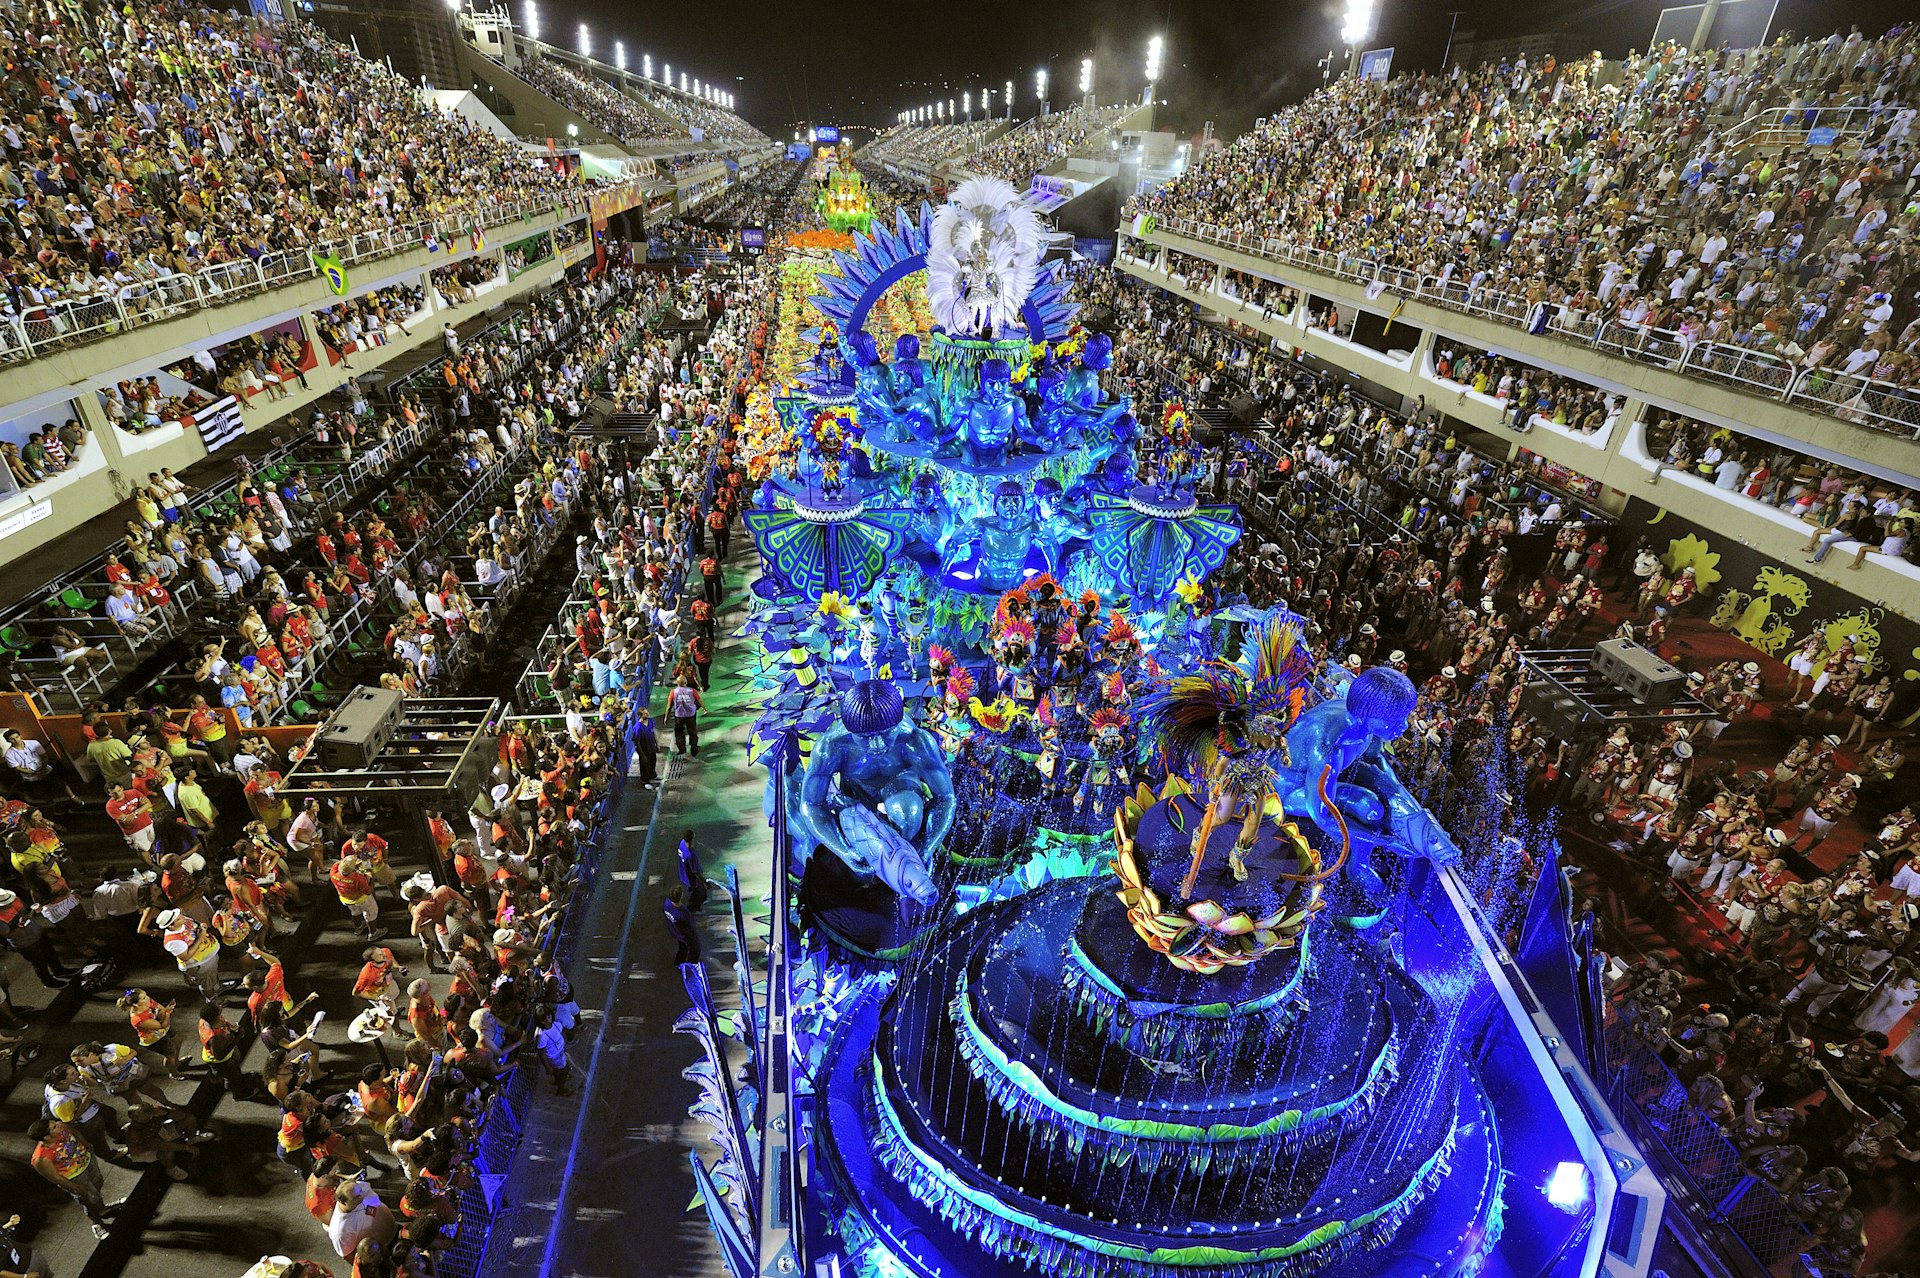 A samba school parading in the Sambódromo (Sambadrome) carnival stadium, with 90,000 spectators during the world-famous carnival in Rio de Janeiro, Brazil.